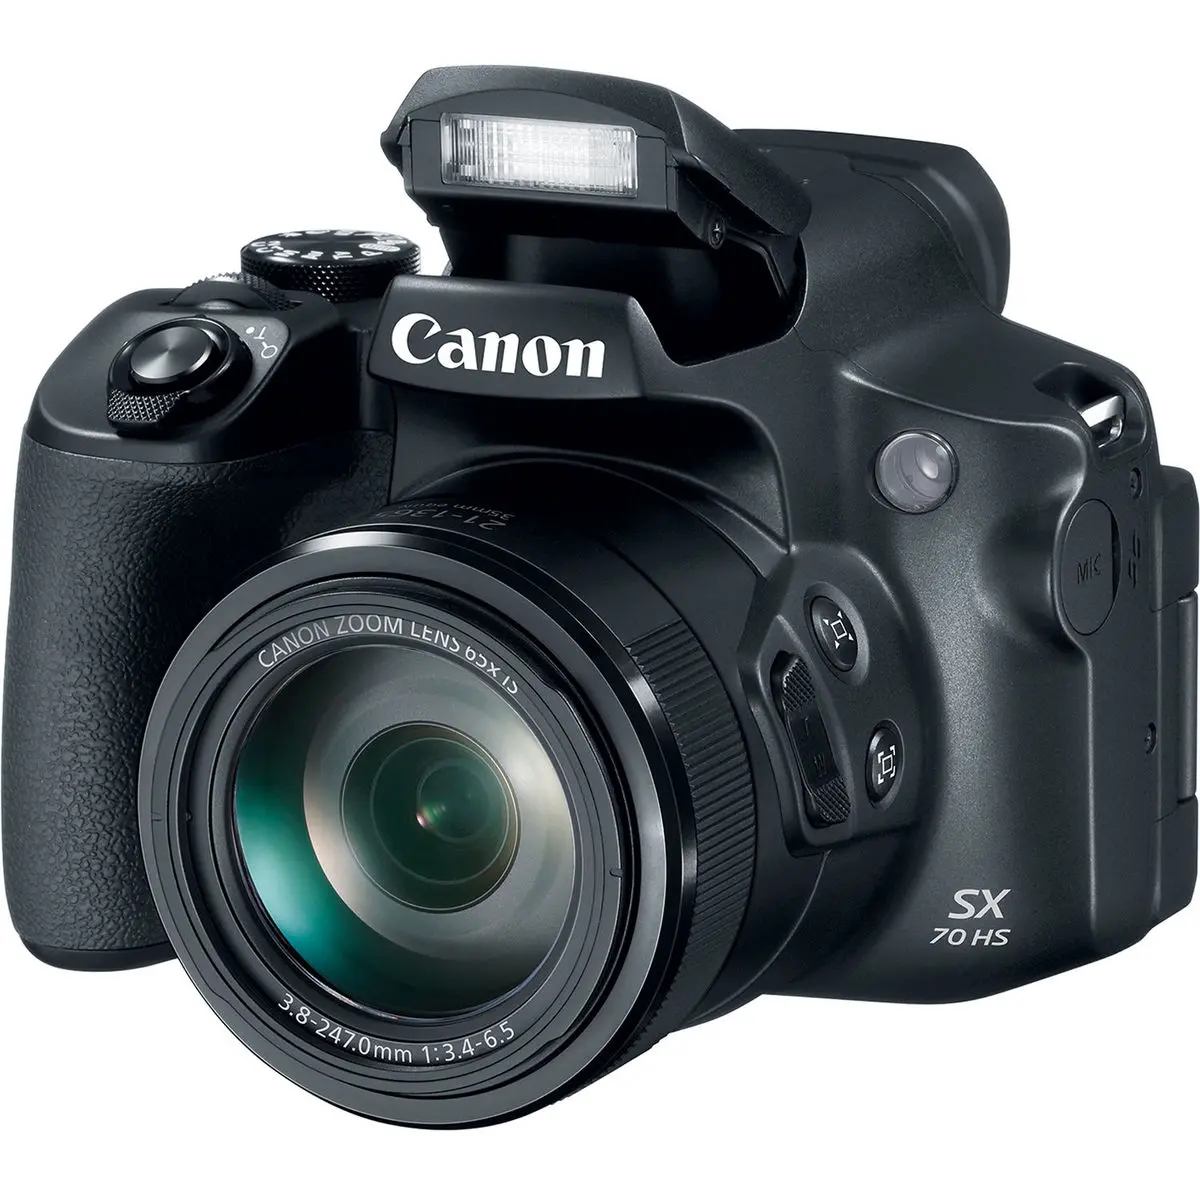 6. Canon PowerShot SX70 HS Black Camera